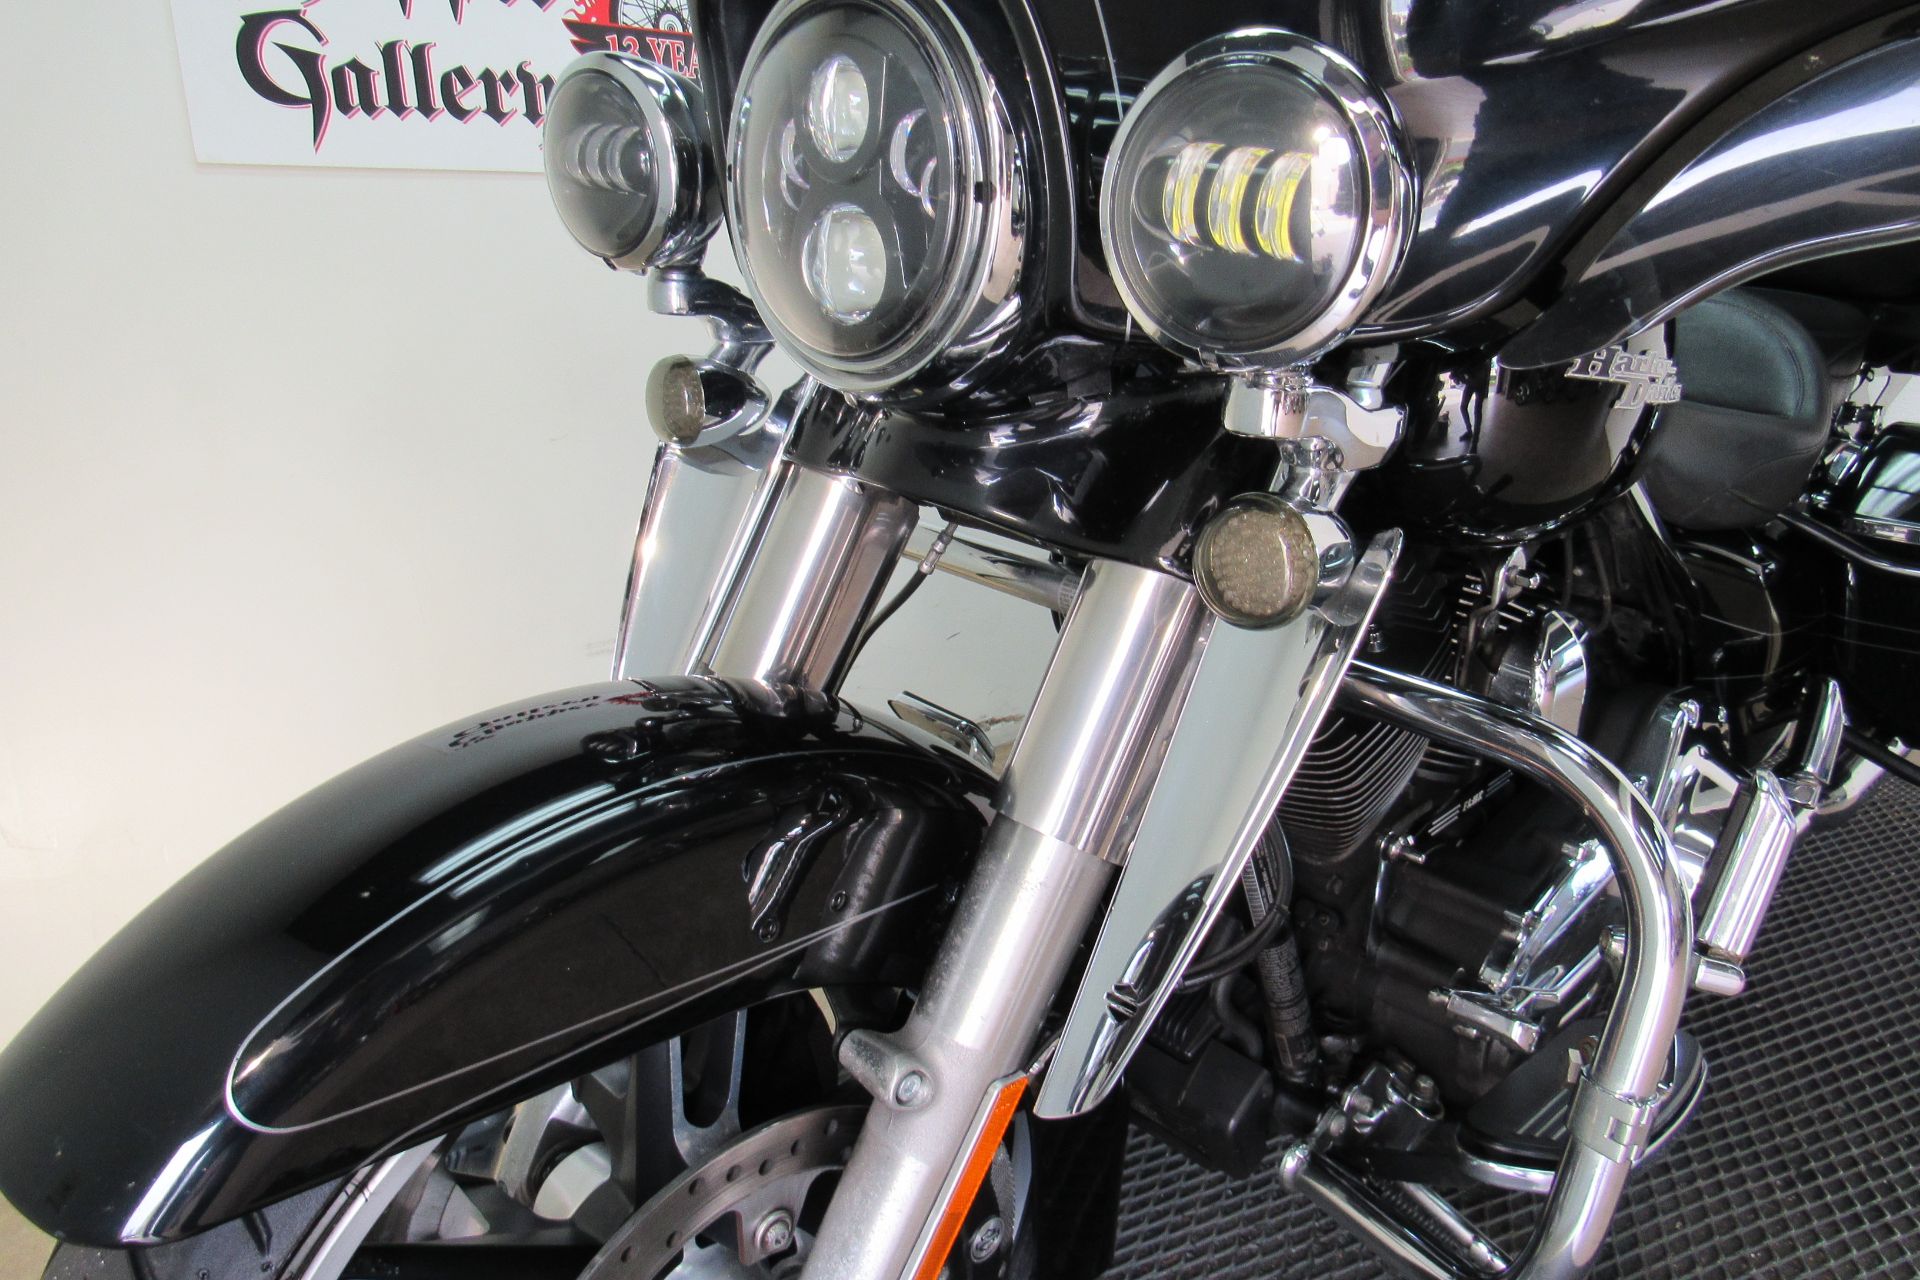 2014 Harley-Davidson Street Glide® Special in Temecula, California - Photo 35